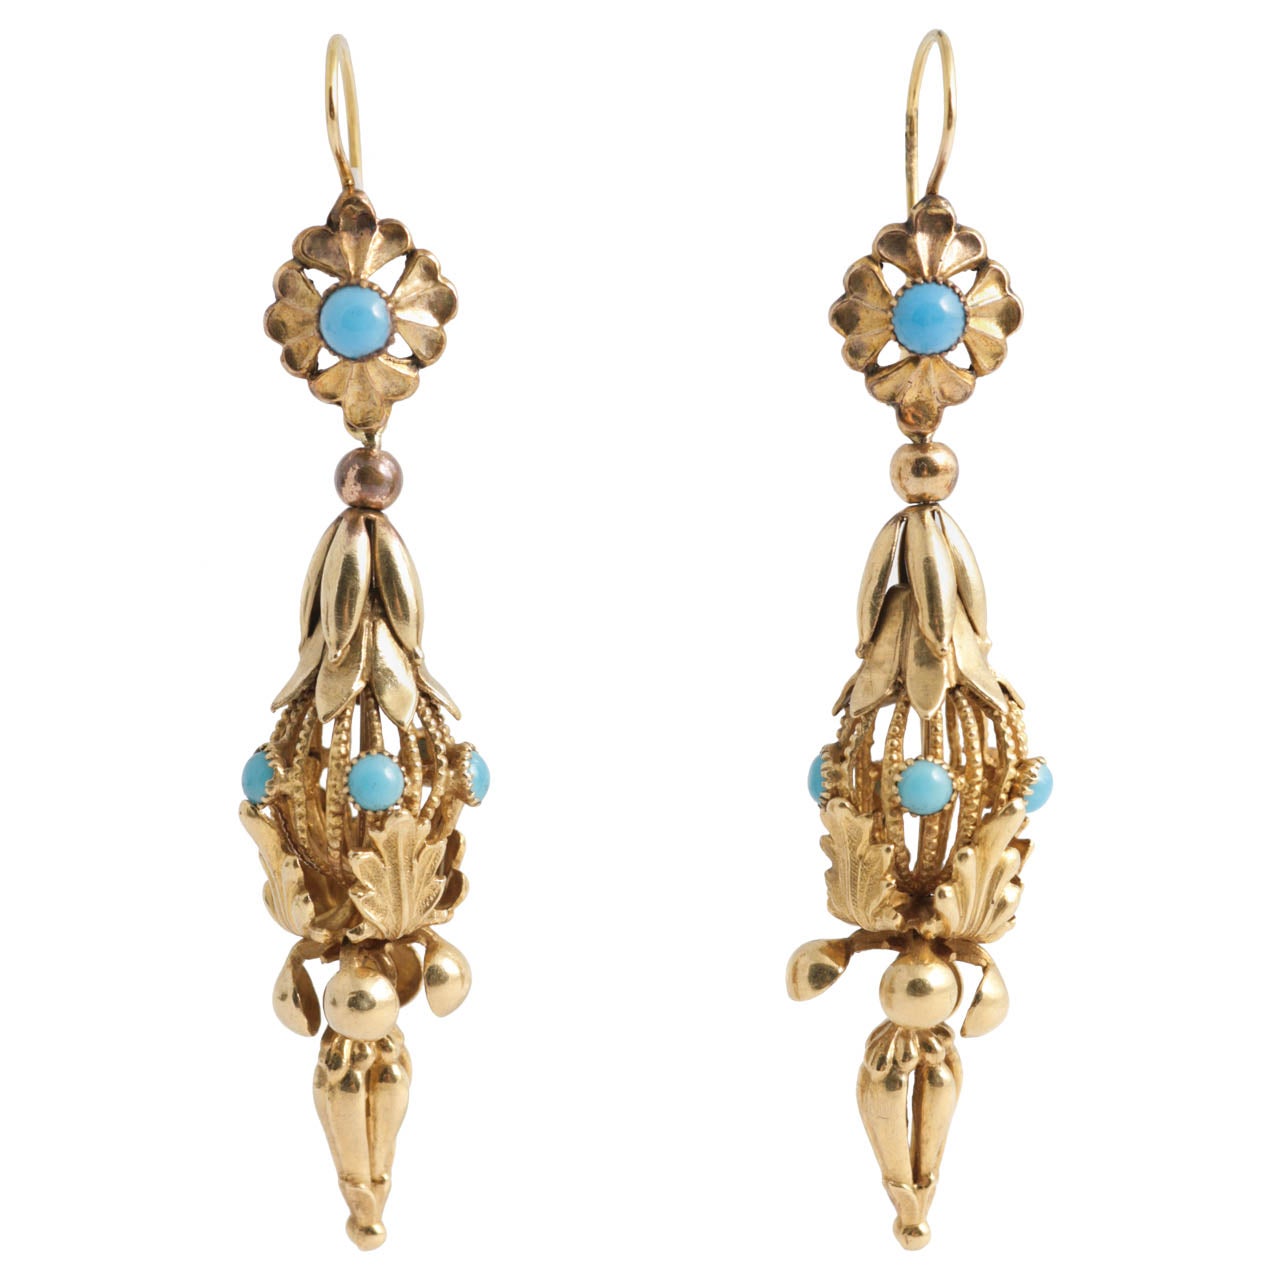 Georgian Turquoise Gold Regency Drop Earrings For Sale At 1stdibs